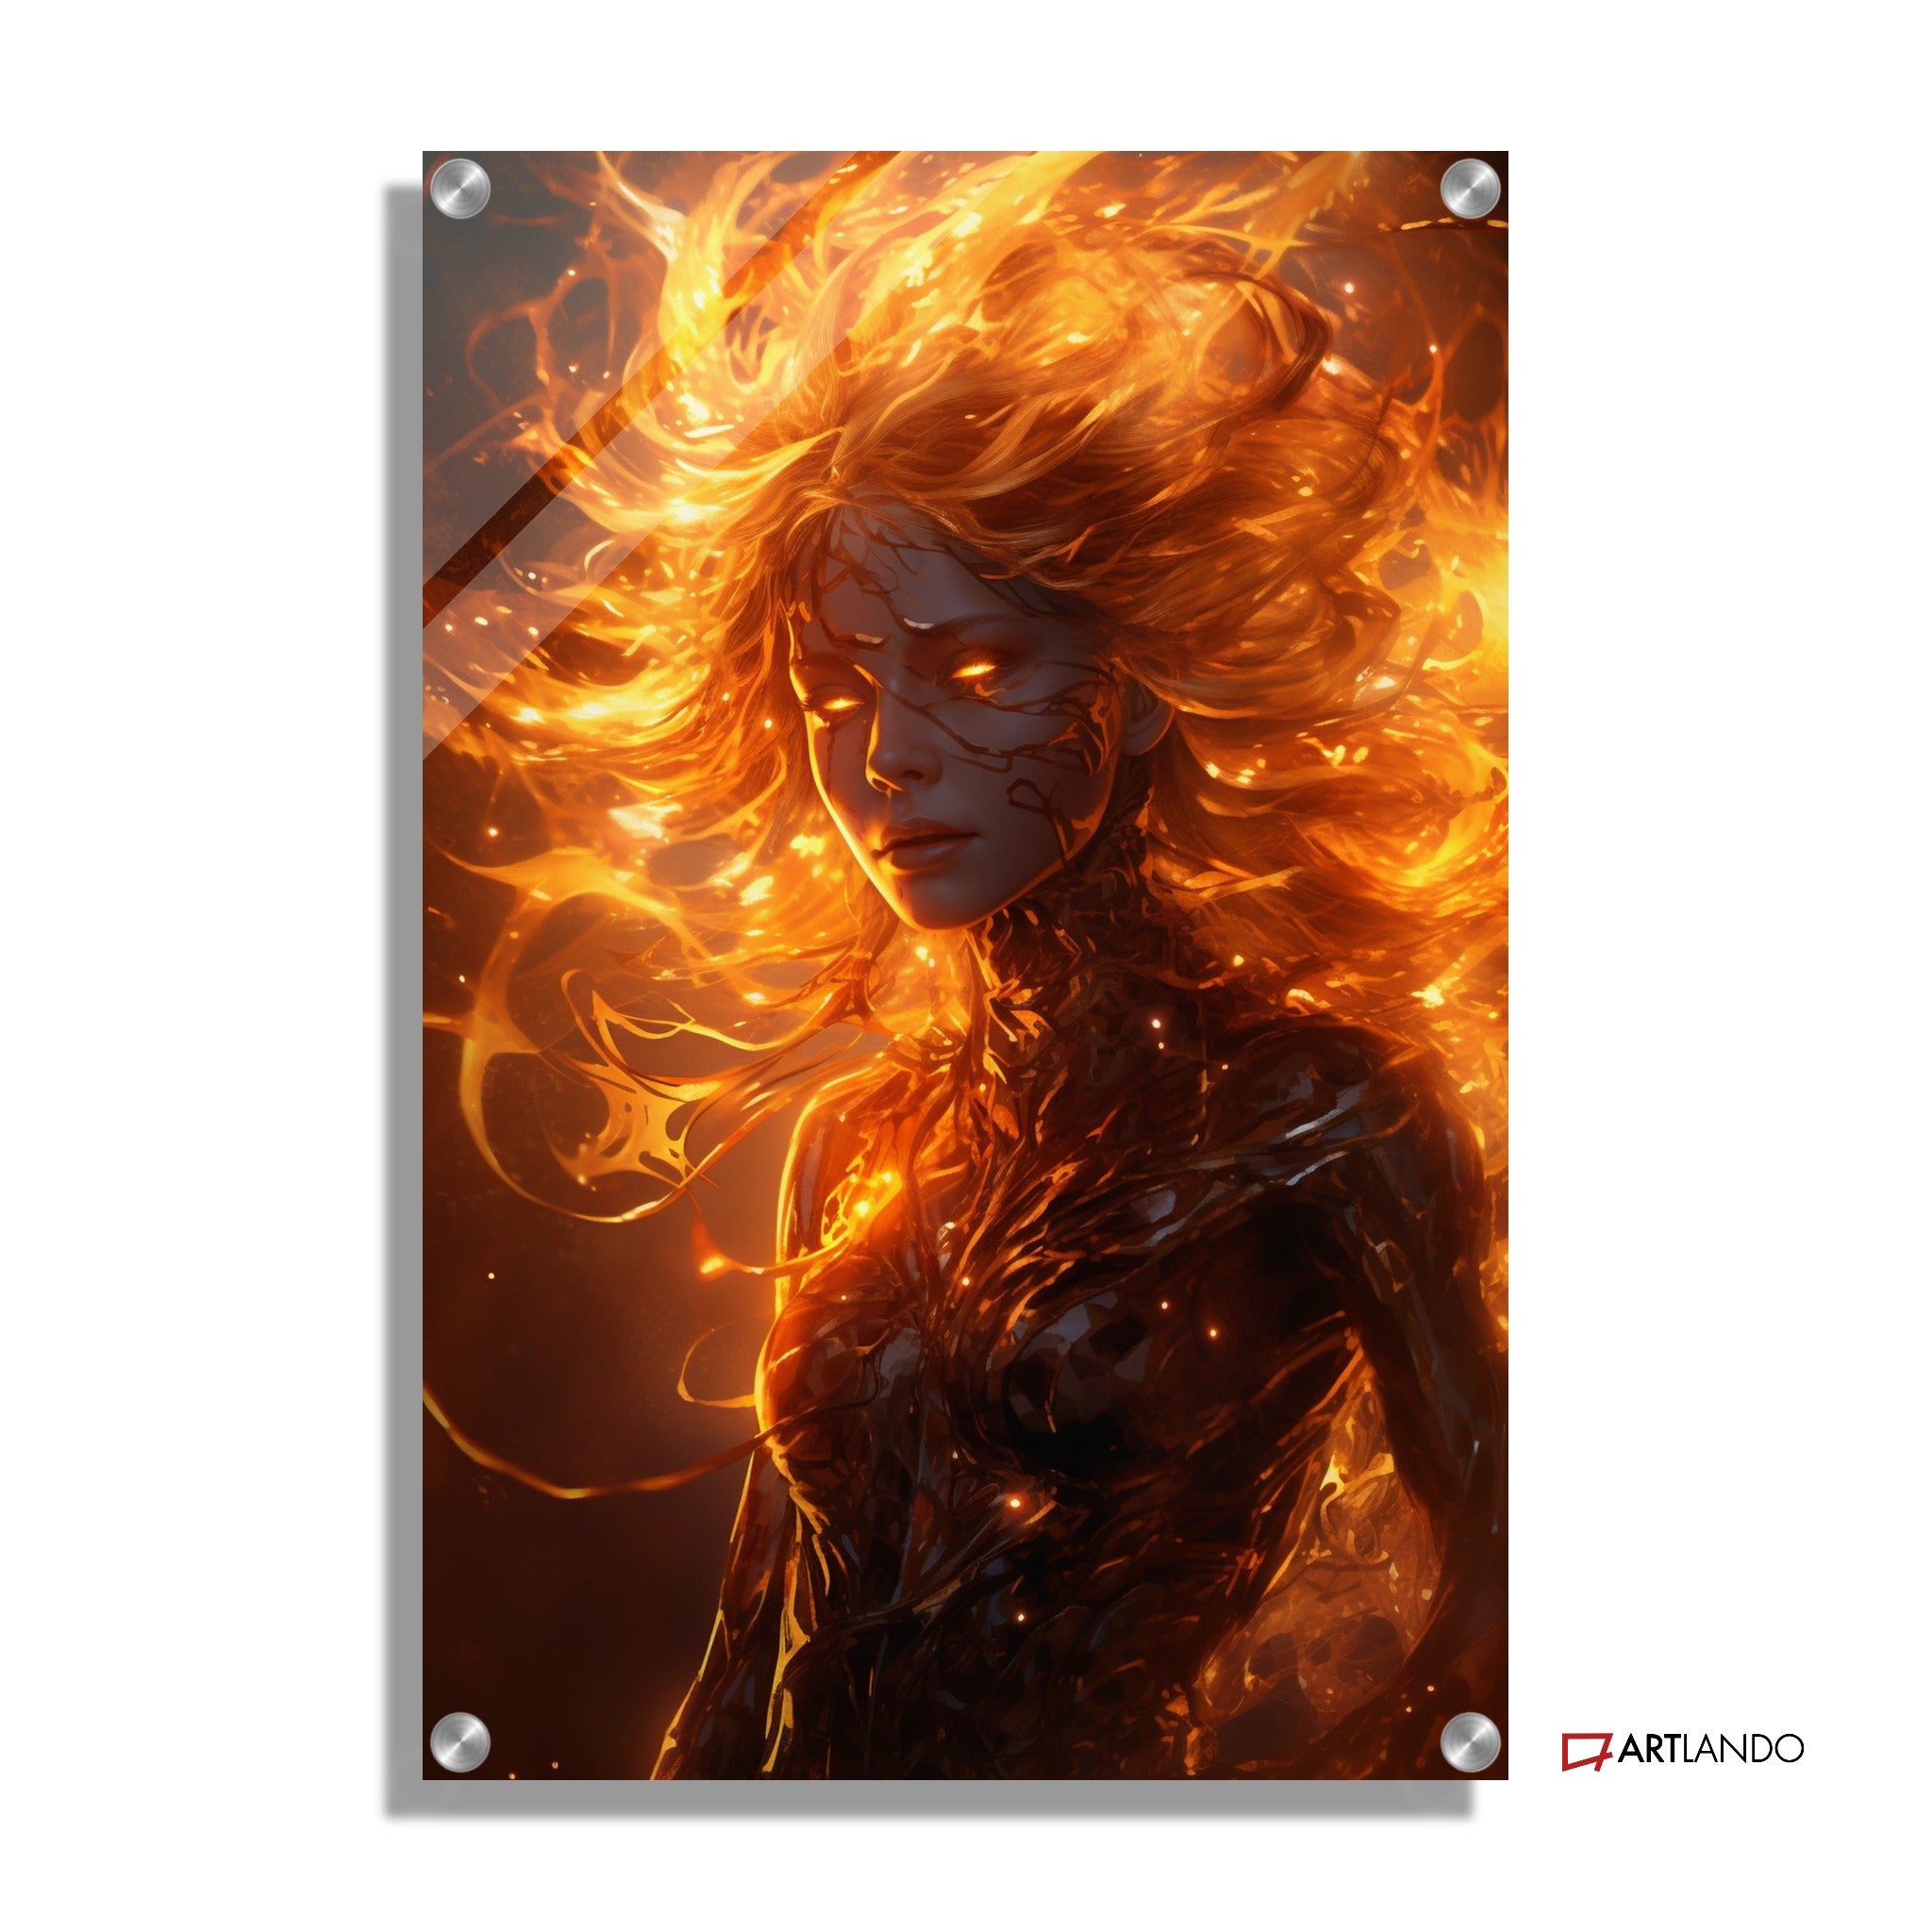 Sonnen-Heldin mit Haaren aus Feuer